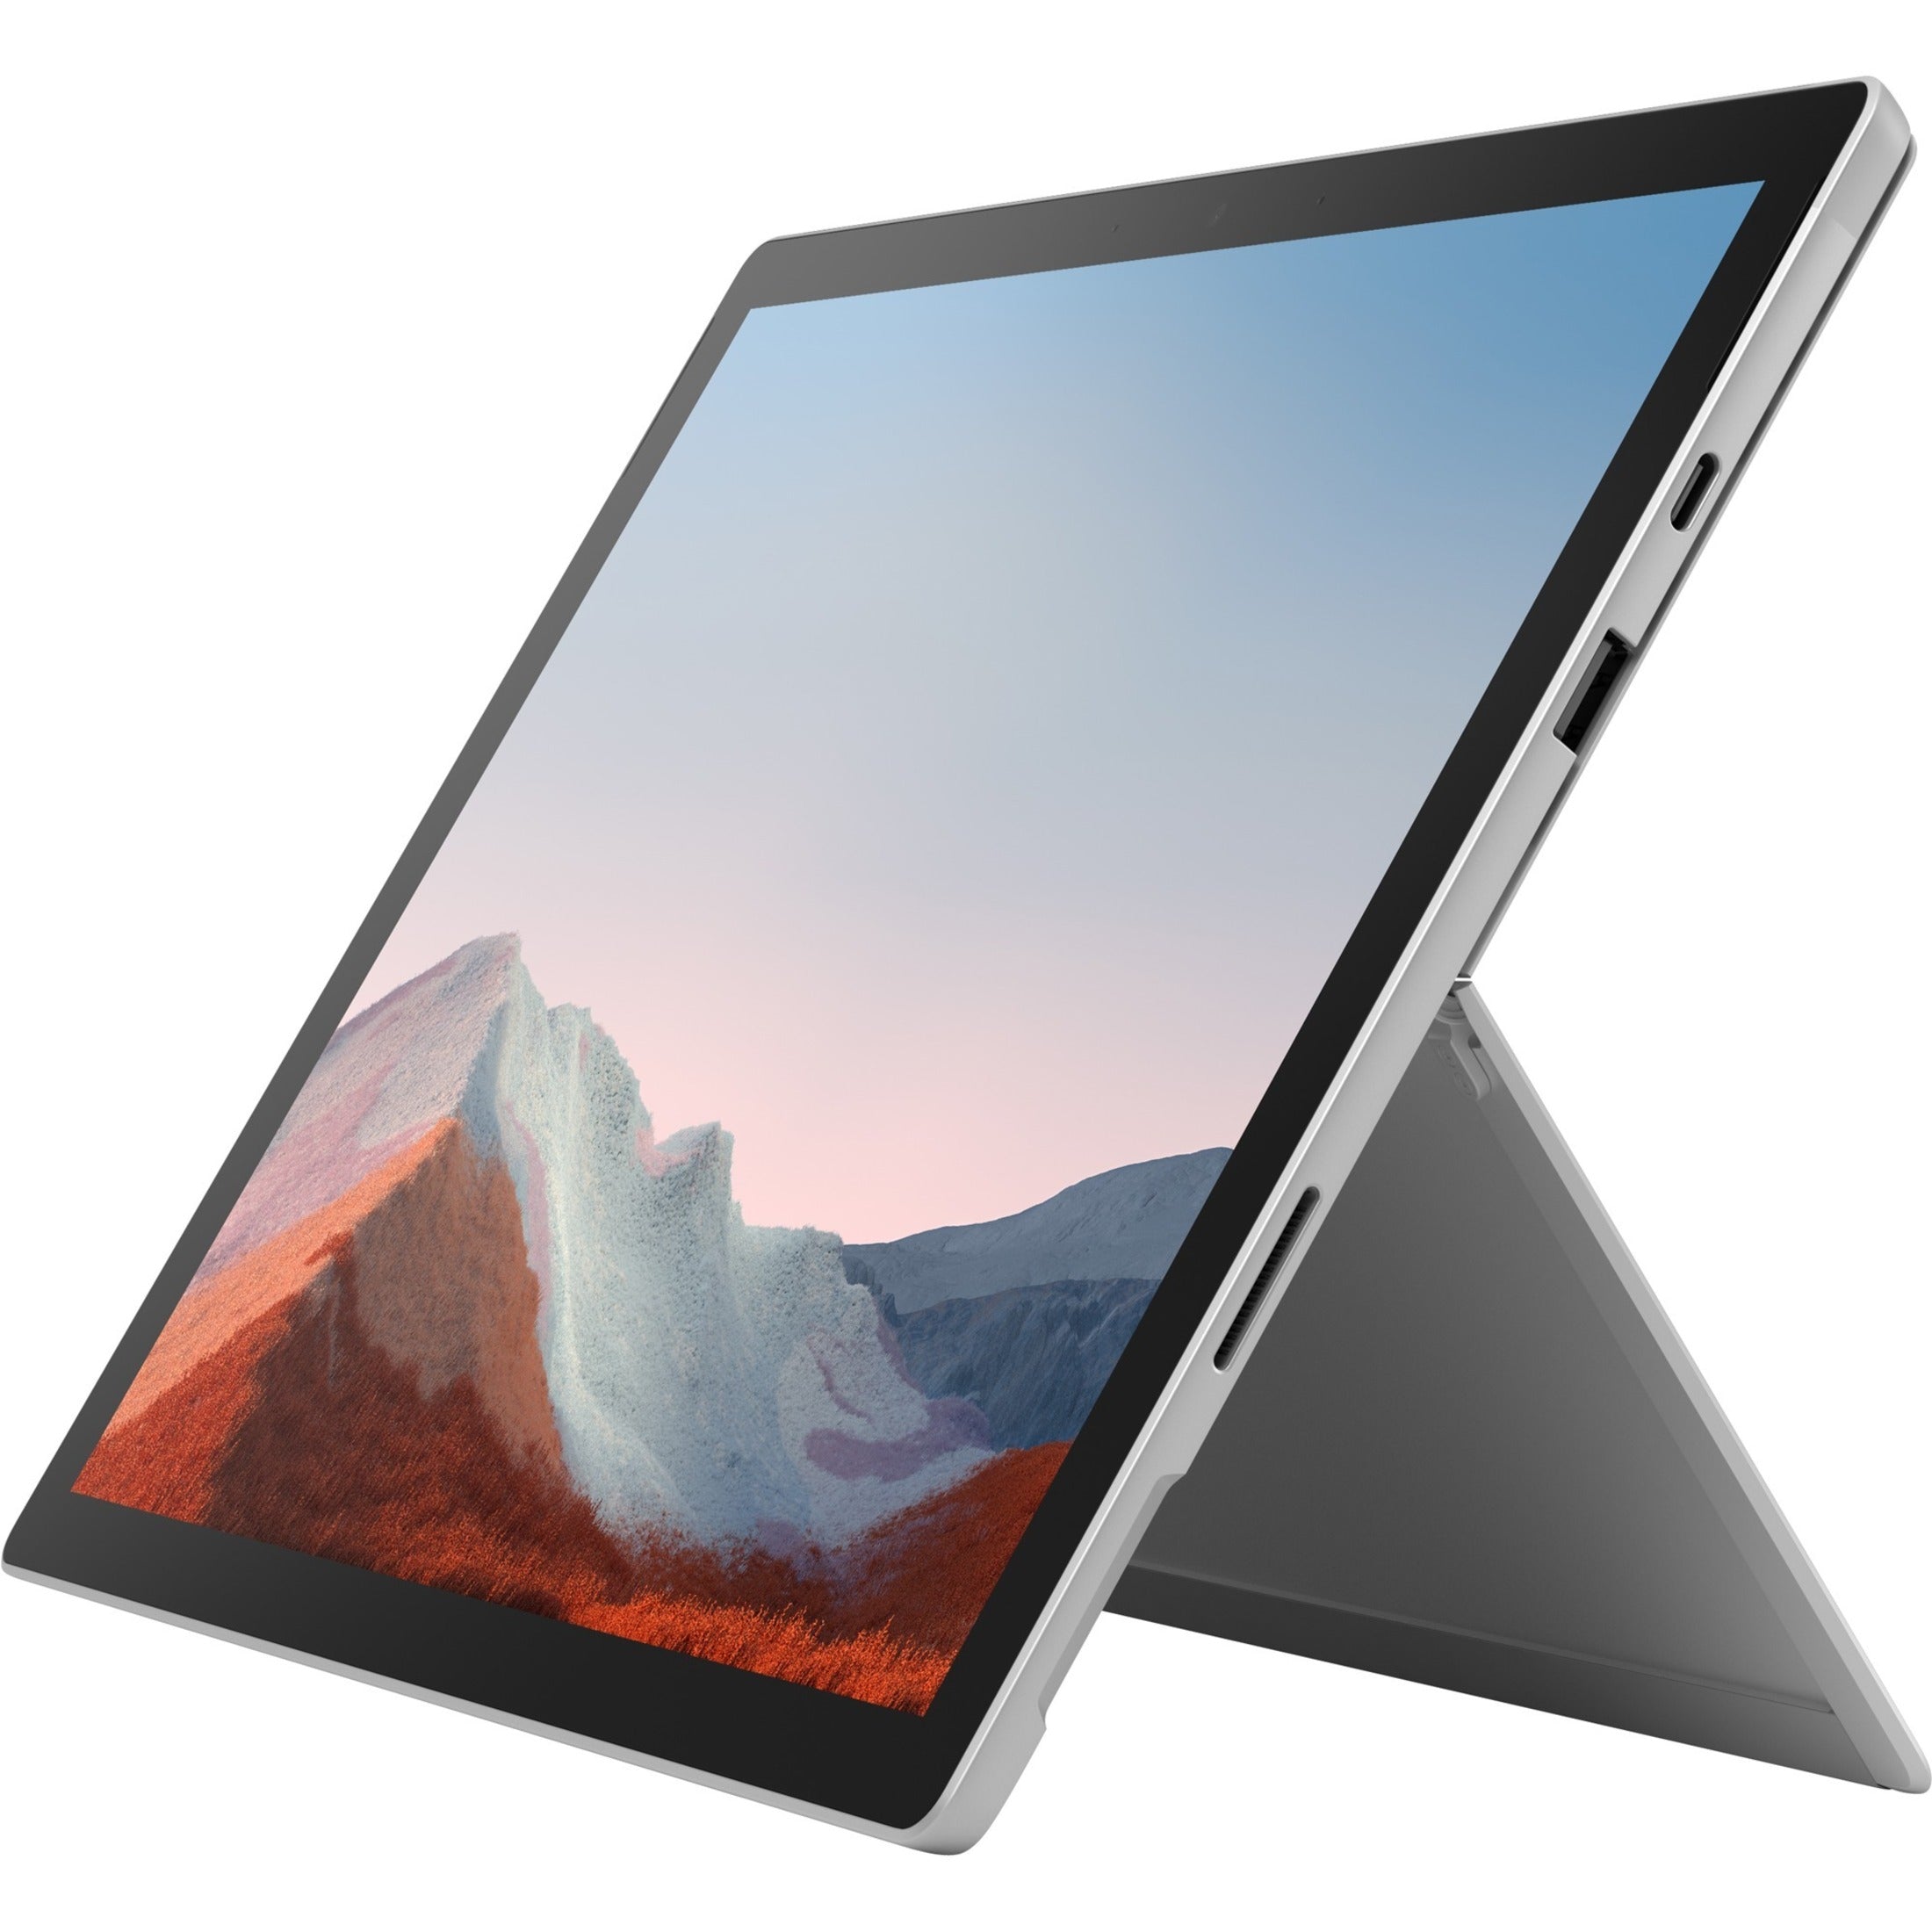 Microsoft 1YC-00001 Surface Pro 7+ Tablet, 12.3 PixelSense Display, Core i7, 16GB RAM, 256GB SSD, Windows 10 Pro